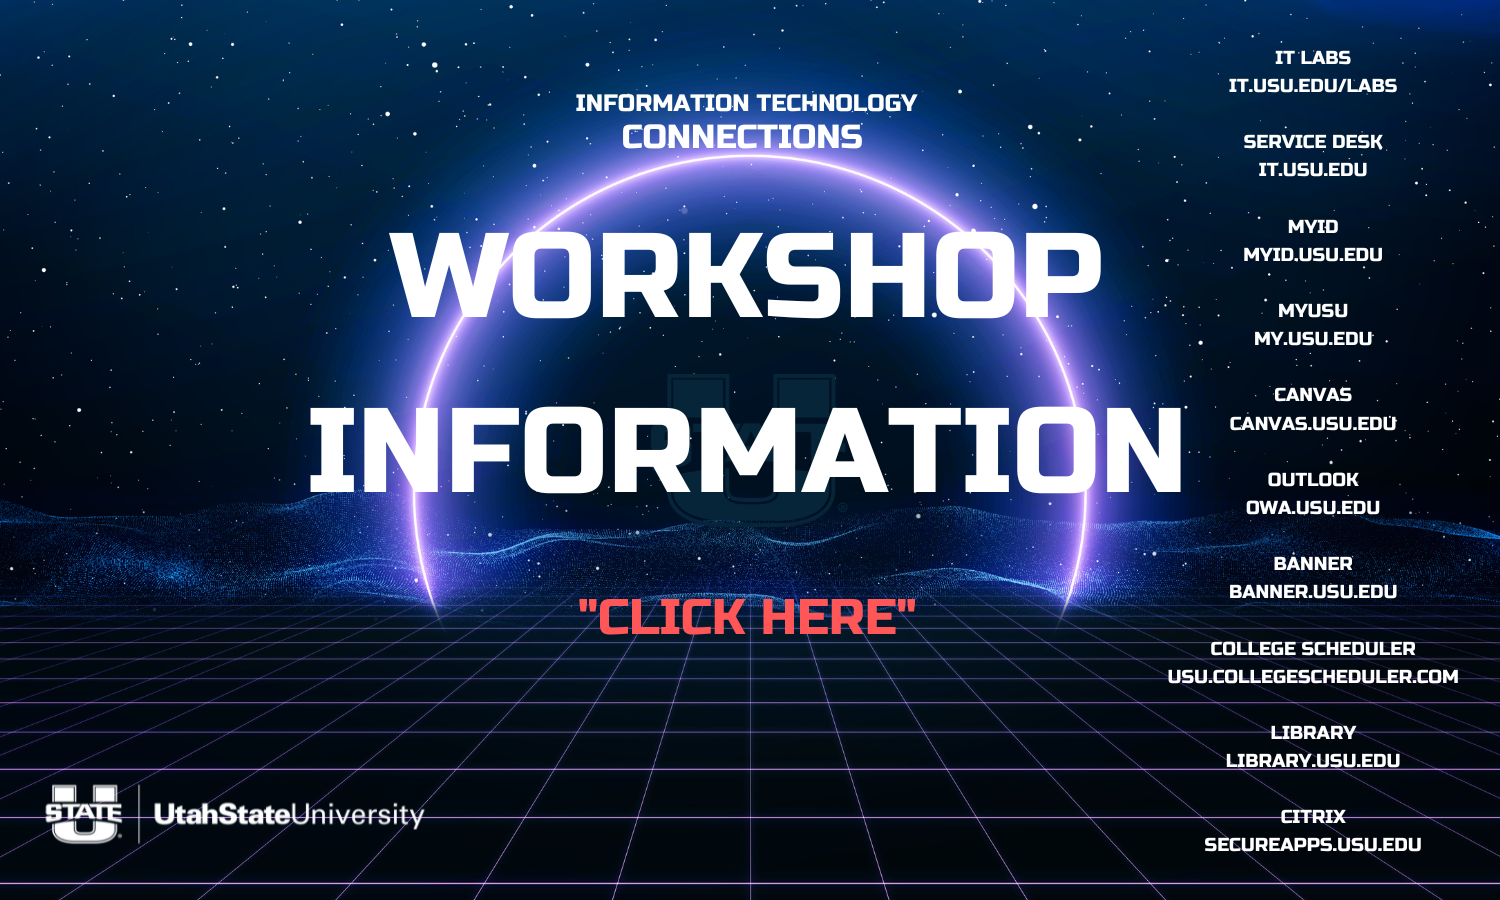 Text Reads: Workshop information